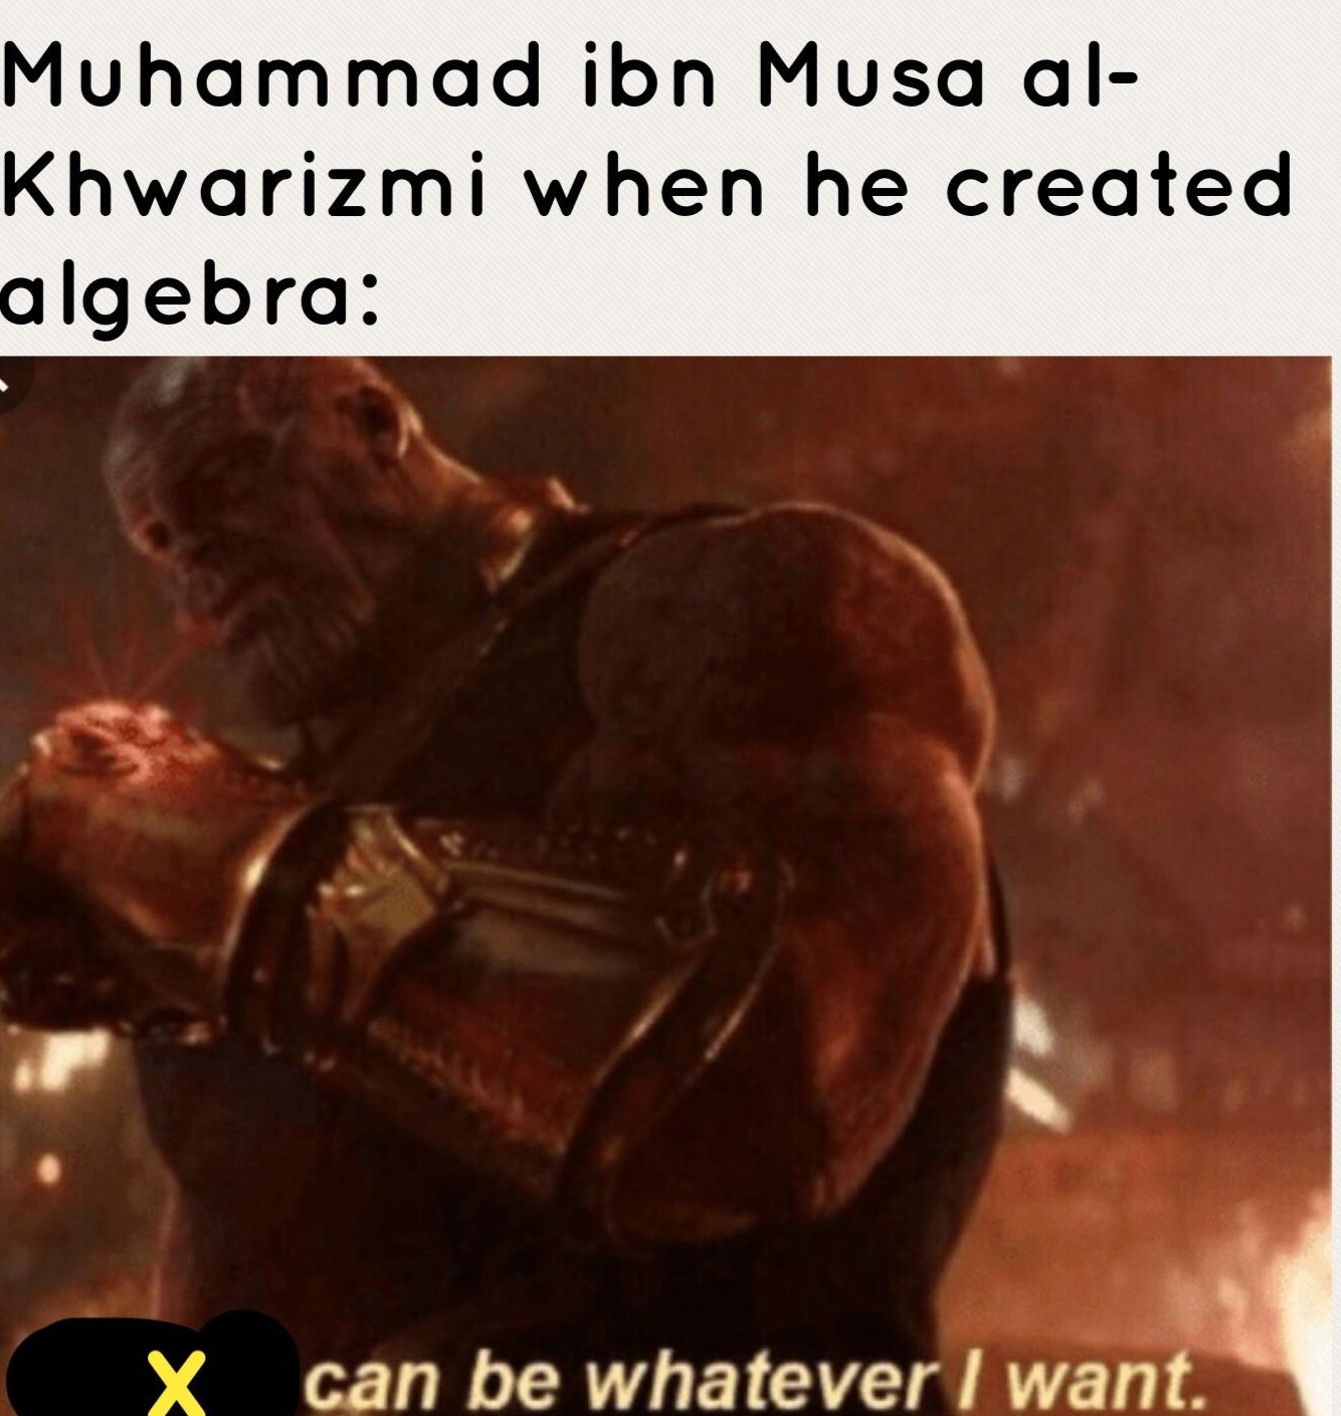 The creator of algebra